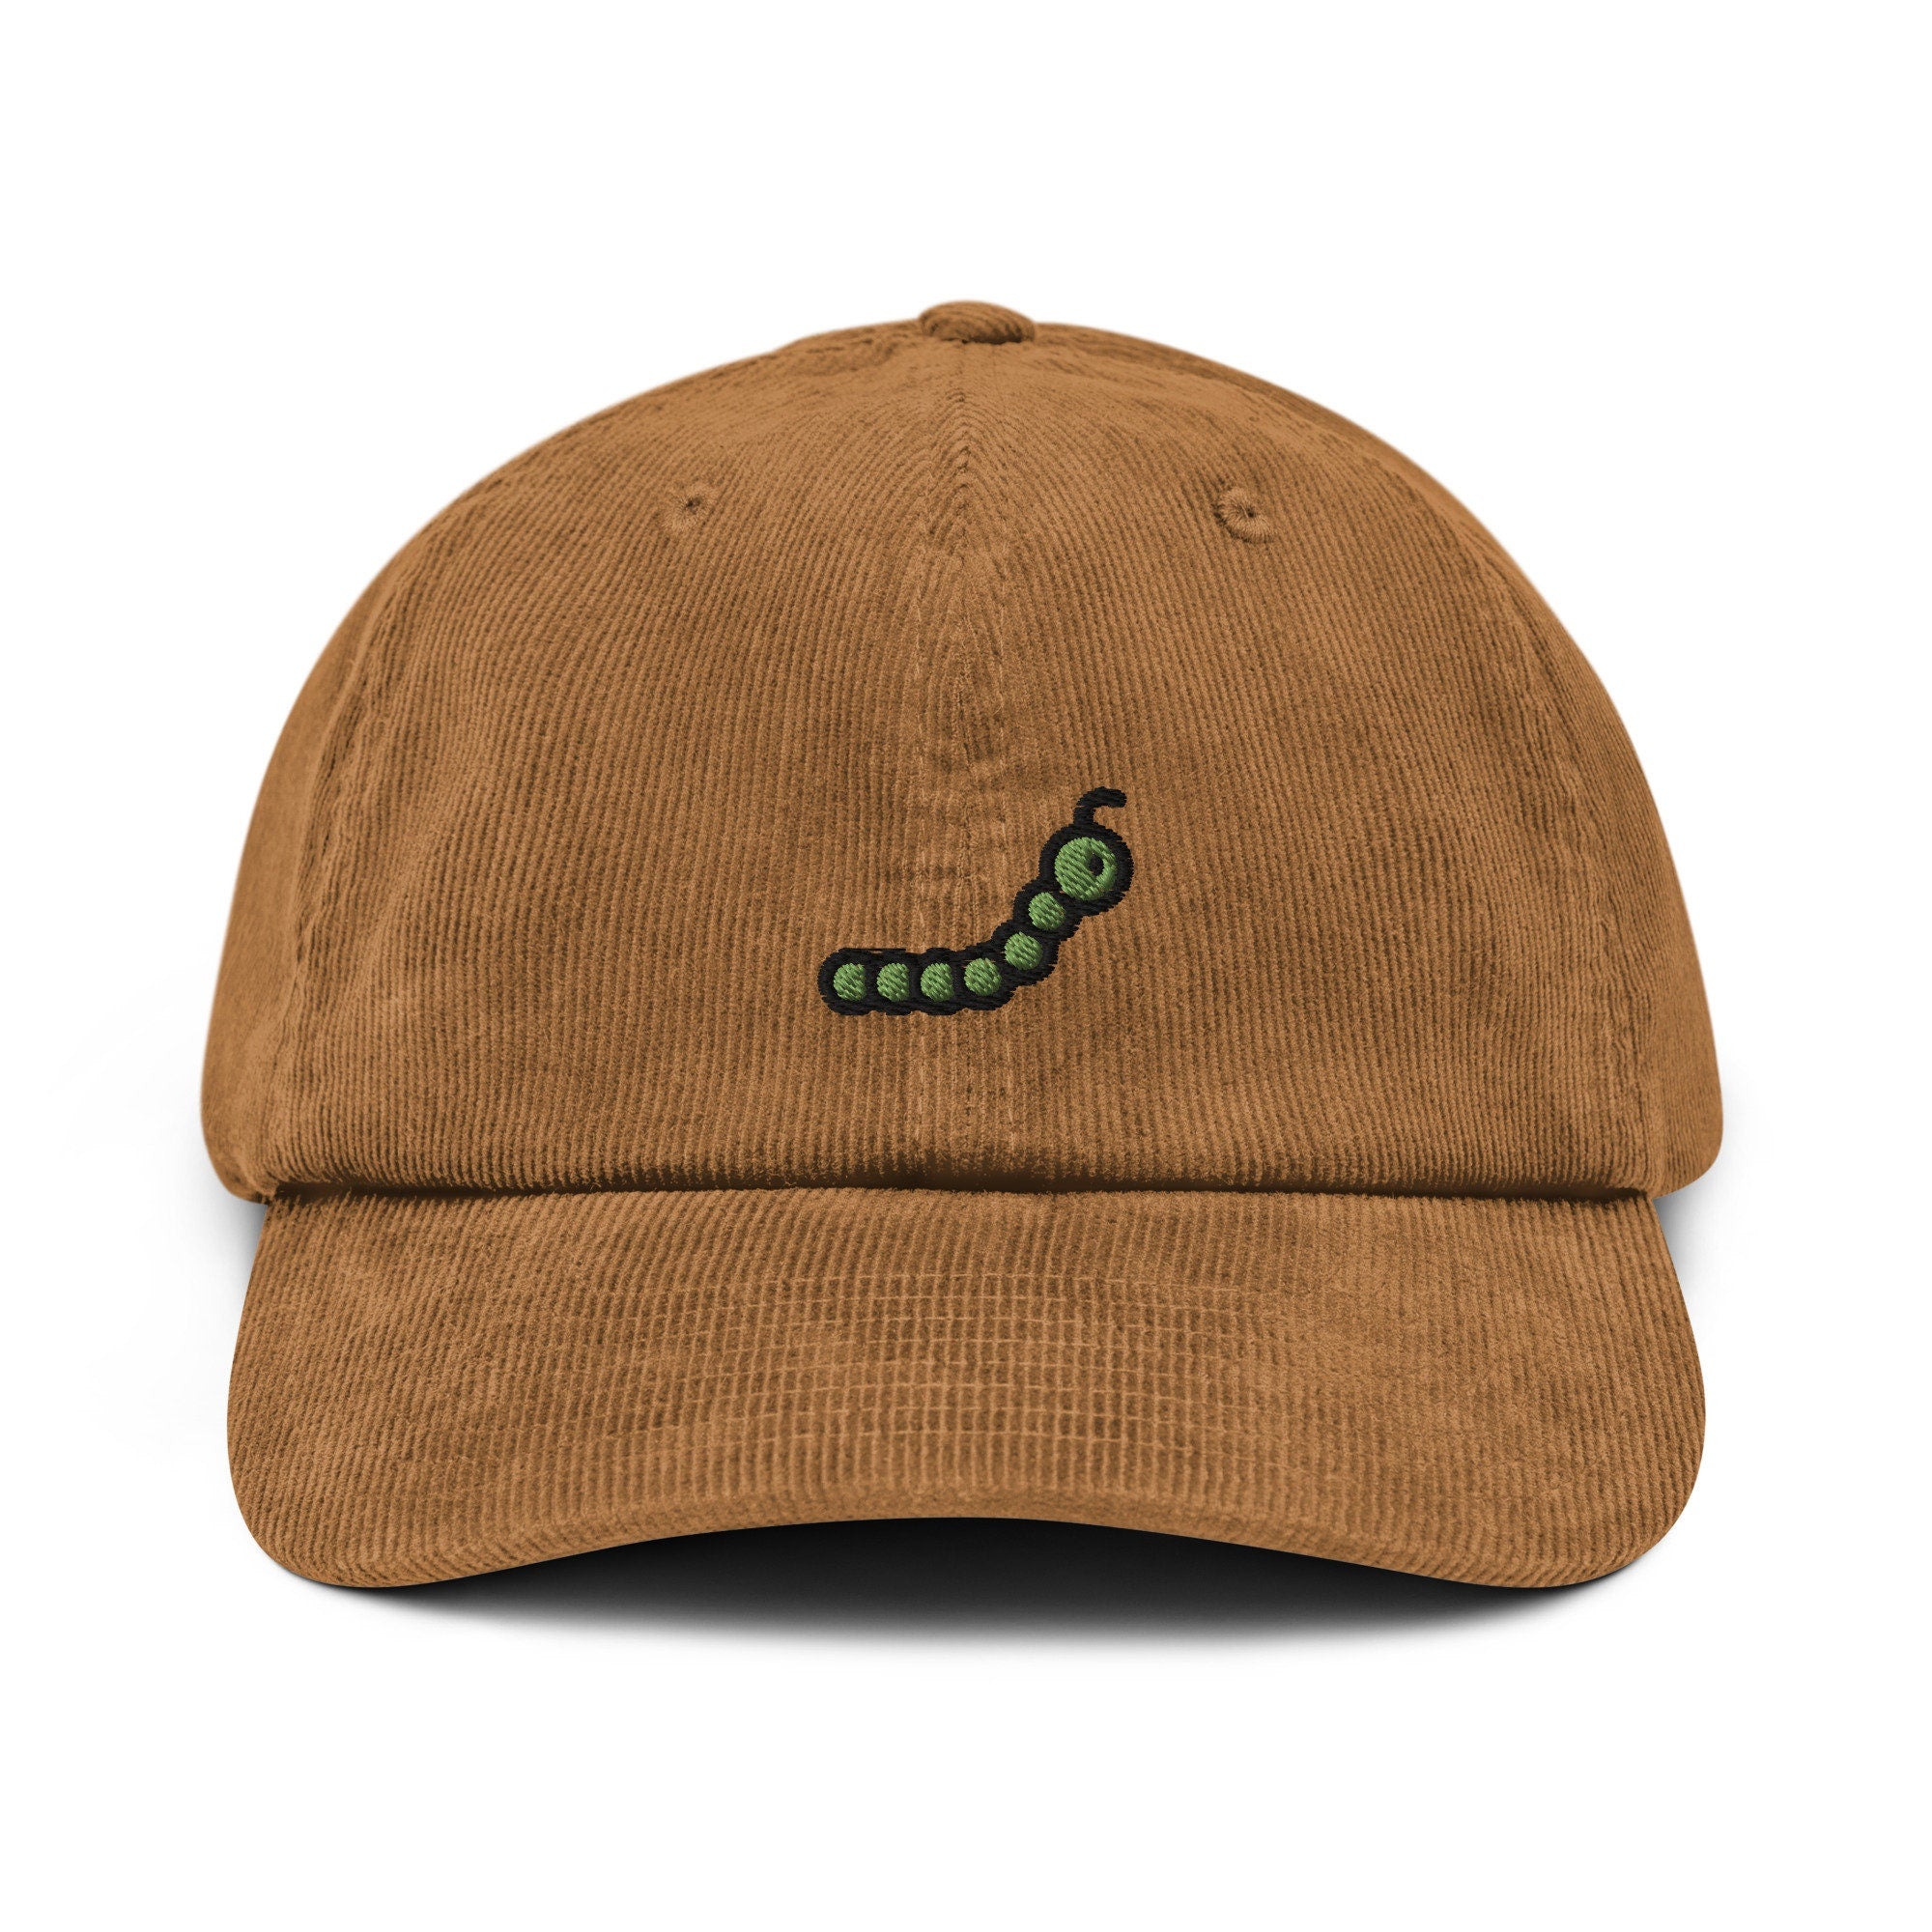 Caterpillar Corduroy Hat, Handmade Embroidered Corduroy Dad Cap - Multiple Colors